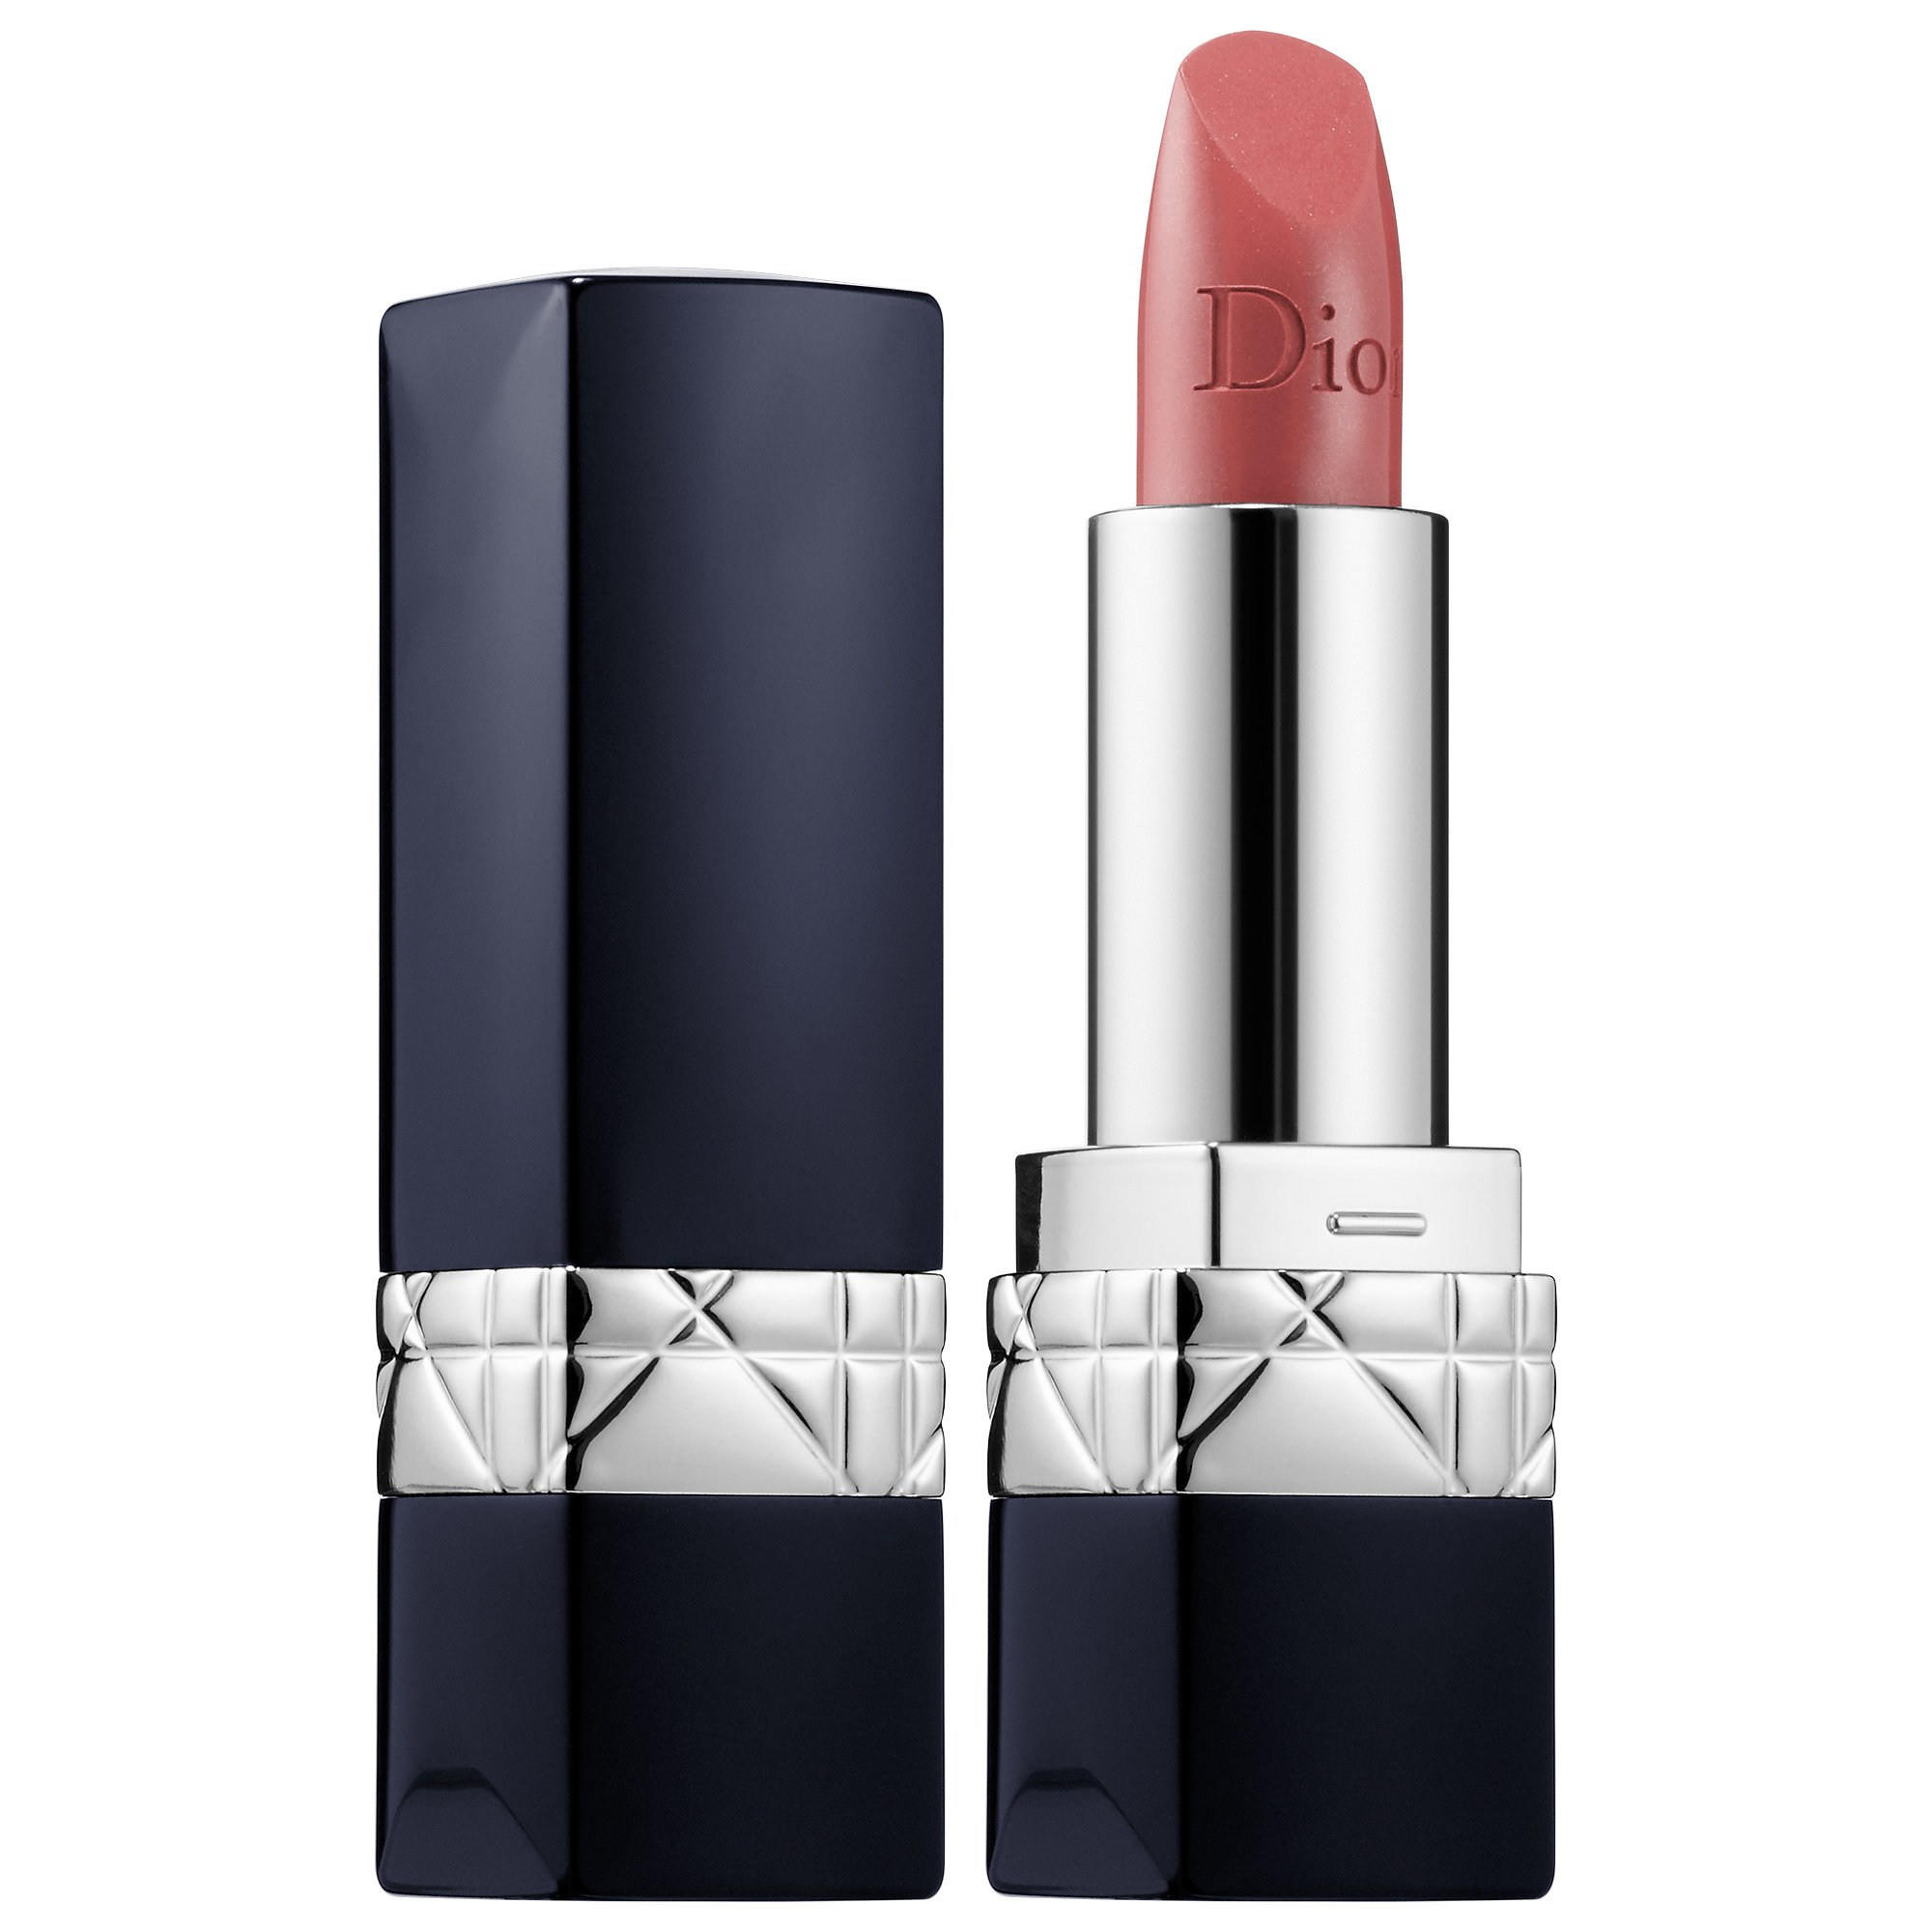 dior 426 lipstick